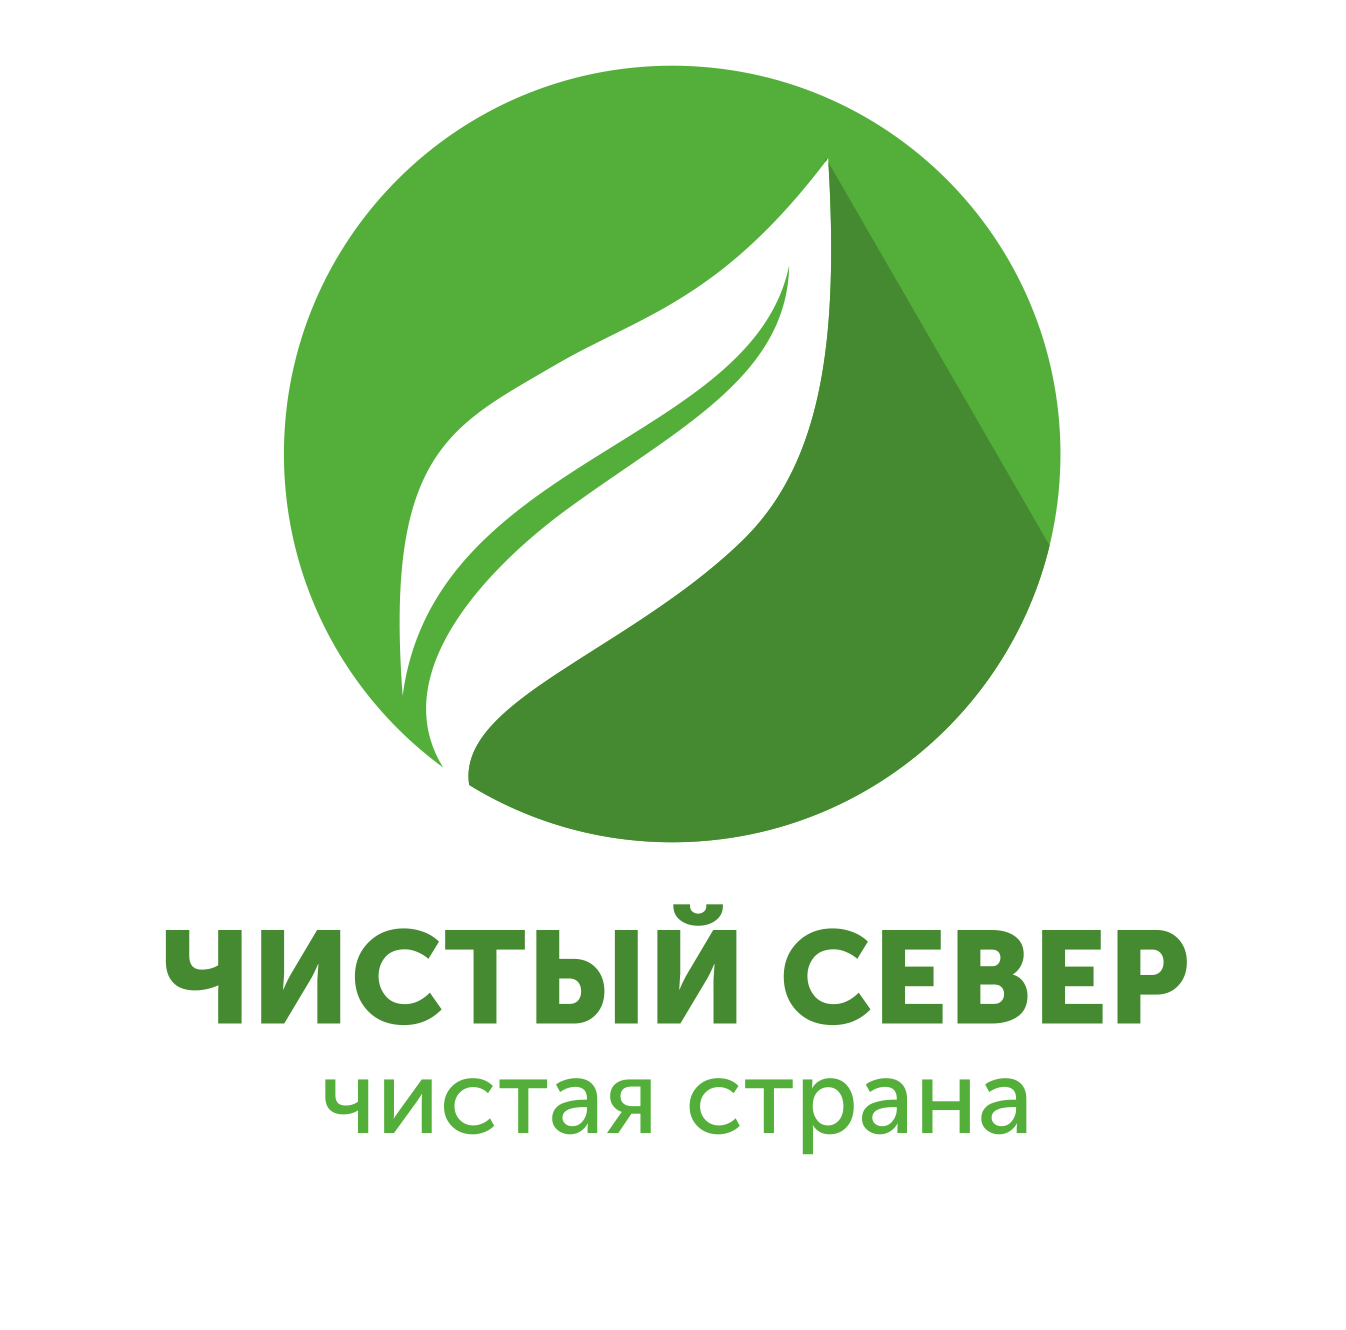 Логотип чисто